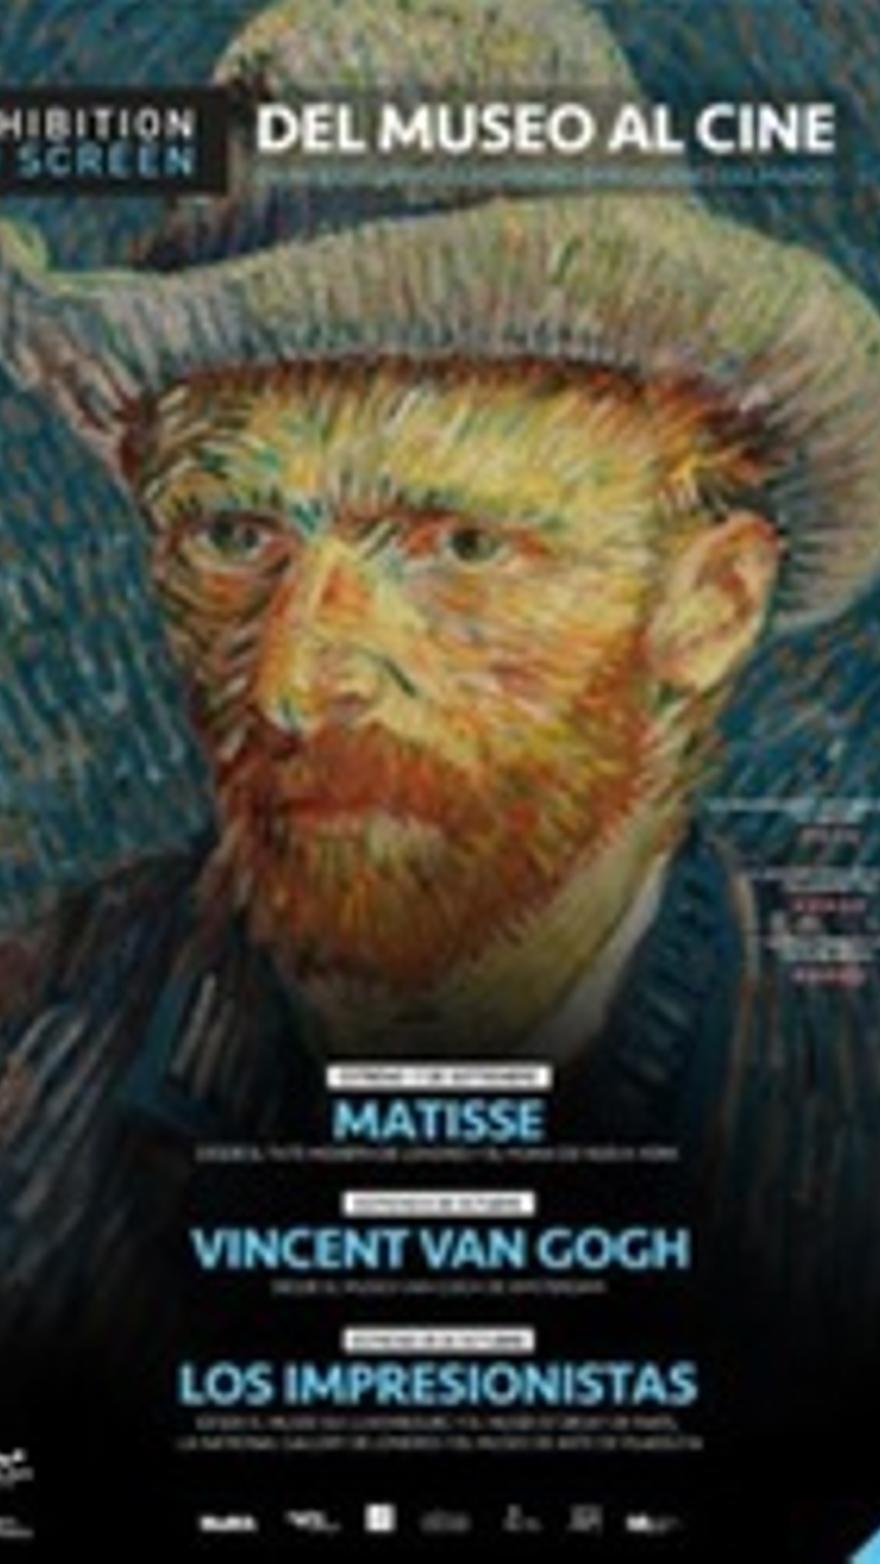 Vincent van Gogh: Una nueva mirada